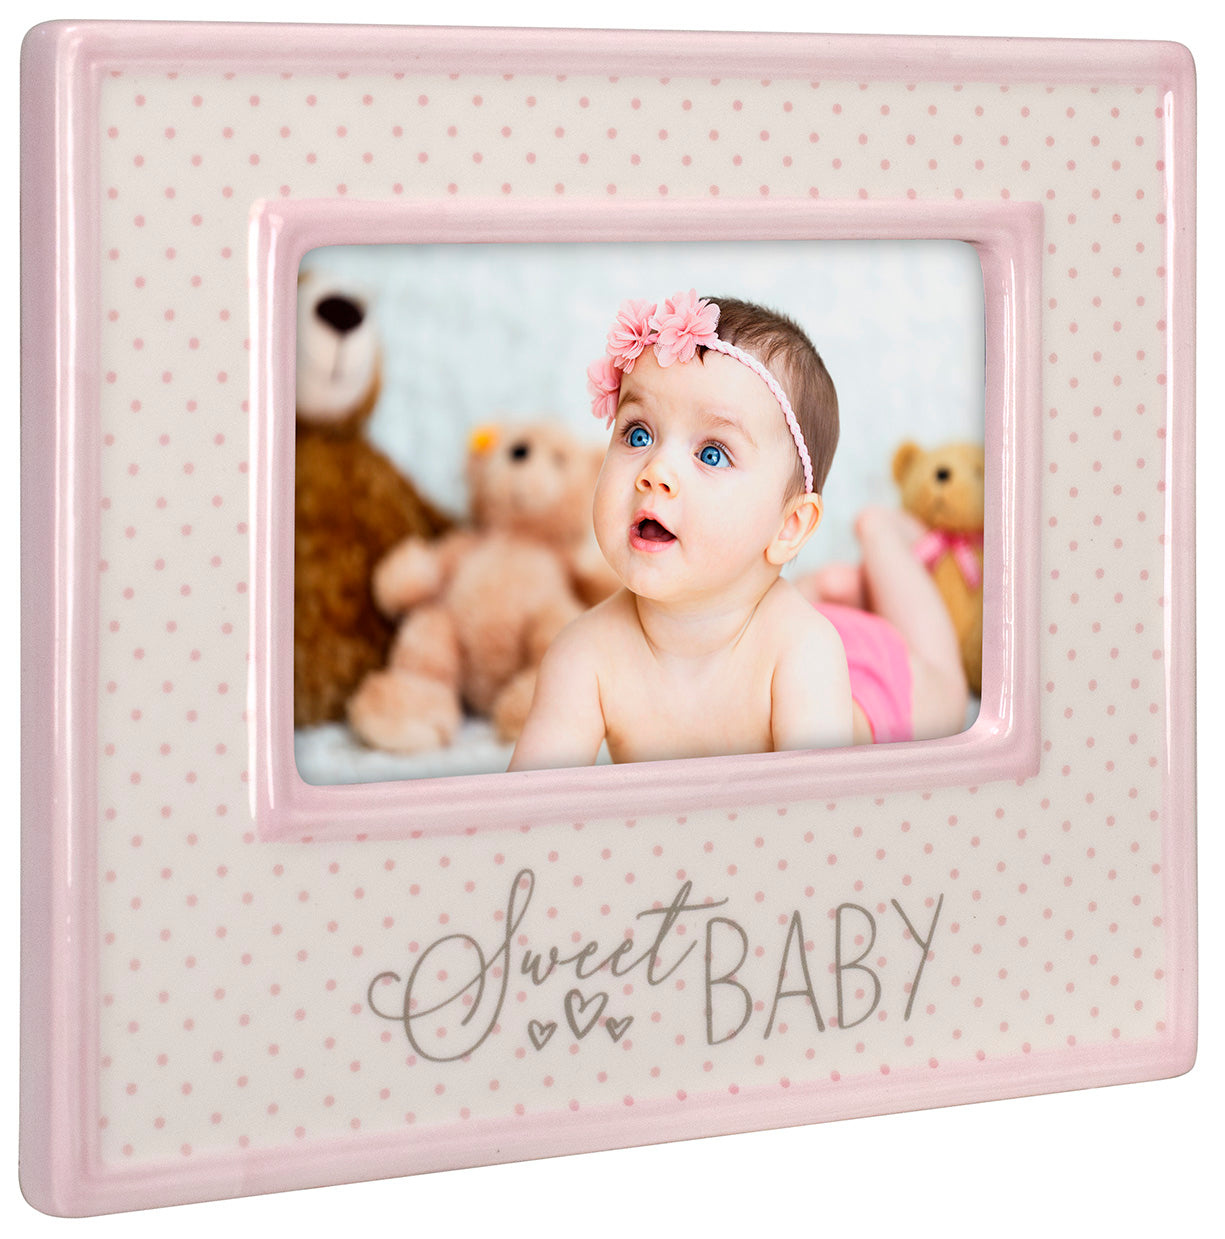 Malden Sweet Baby Ceramic Frame - Pink